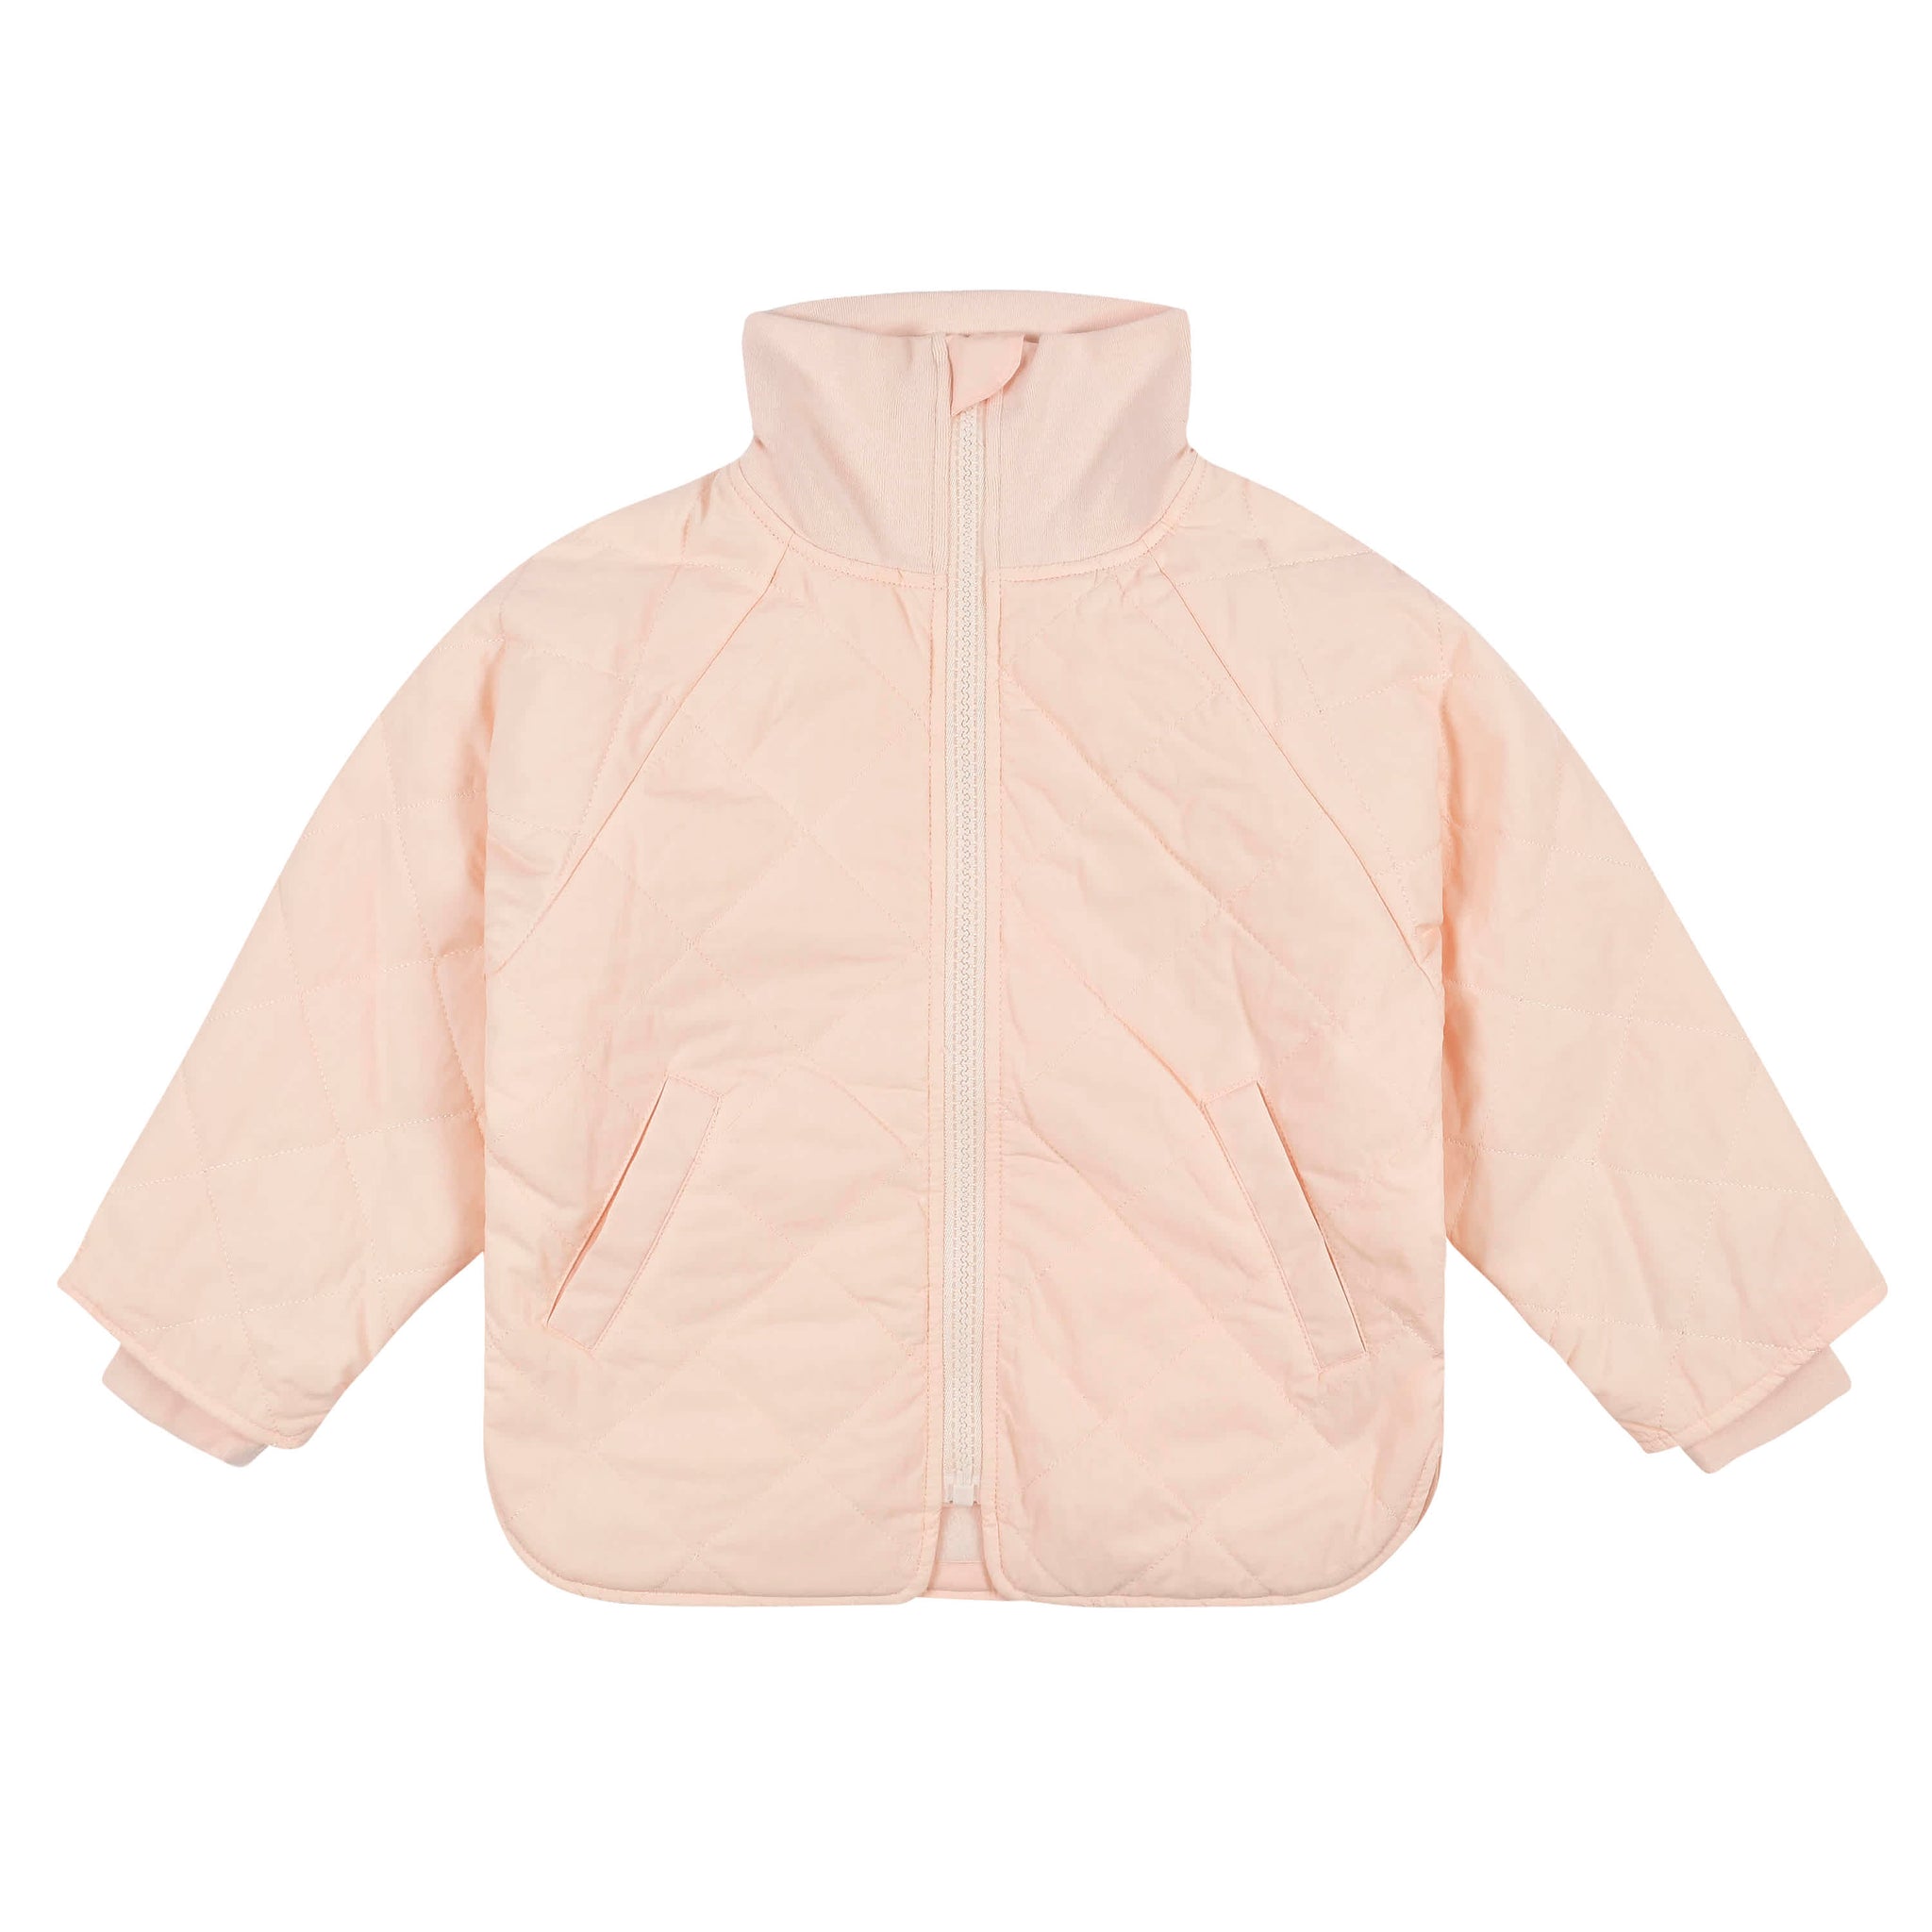 Infant & Toddler Girls Blush Pink Quilted Jacket-Gerber Childrenswear Wholesale